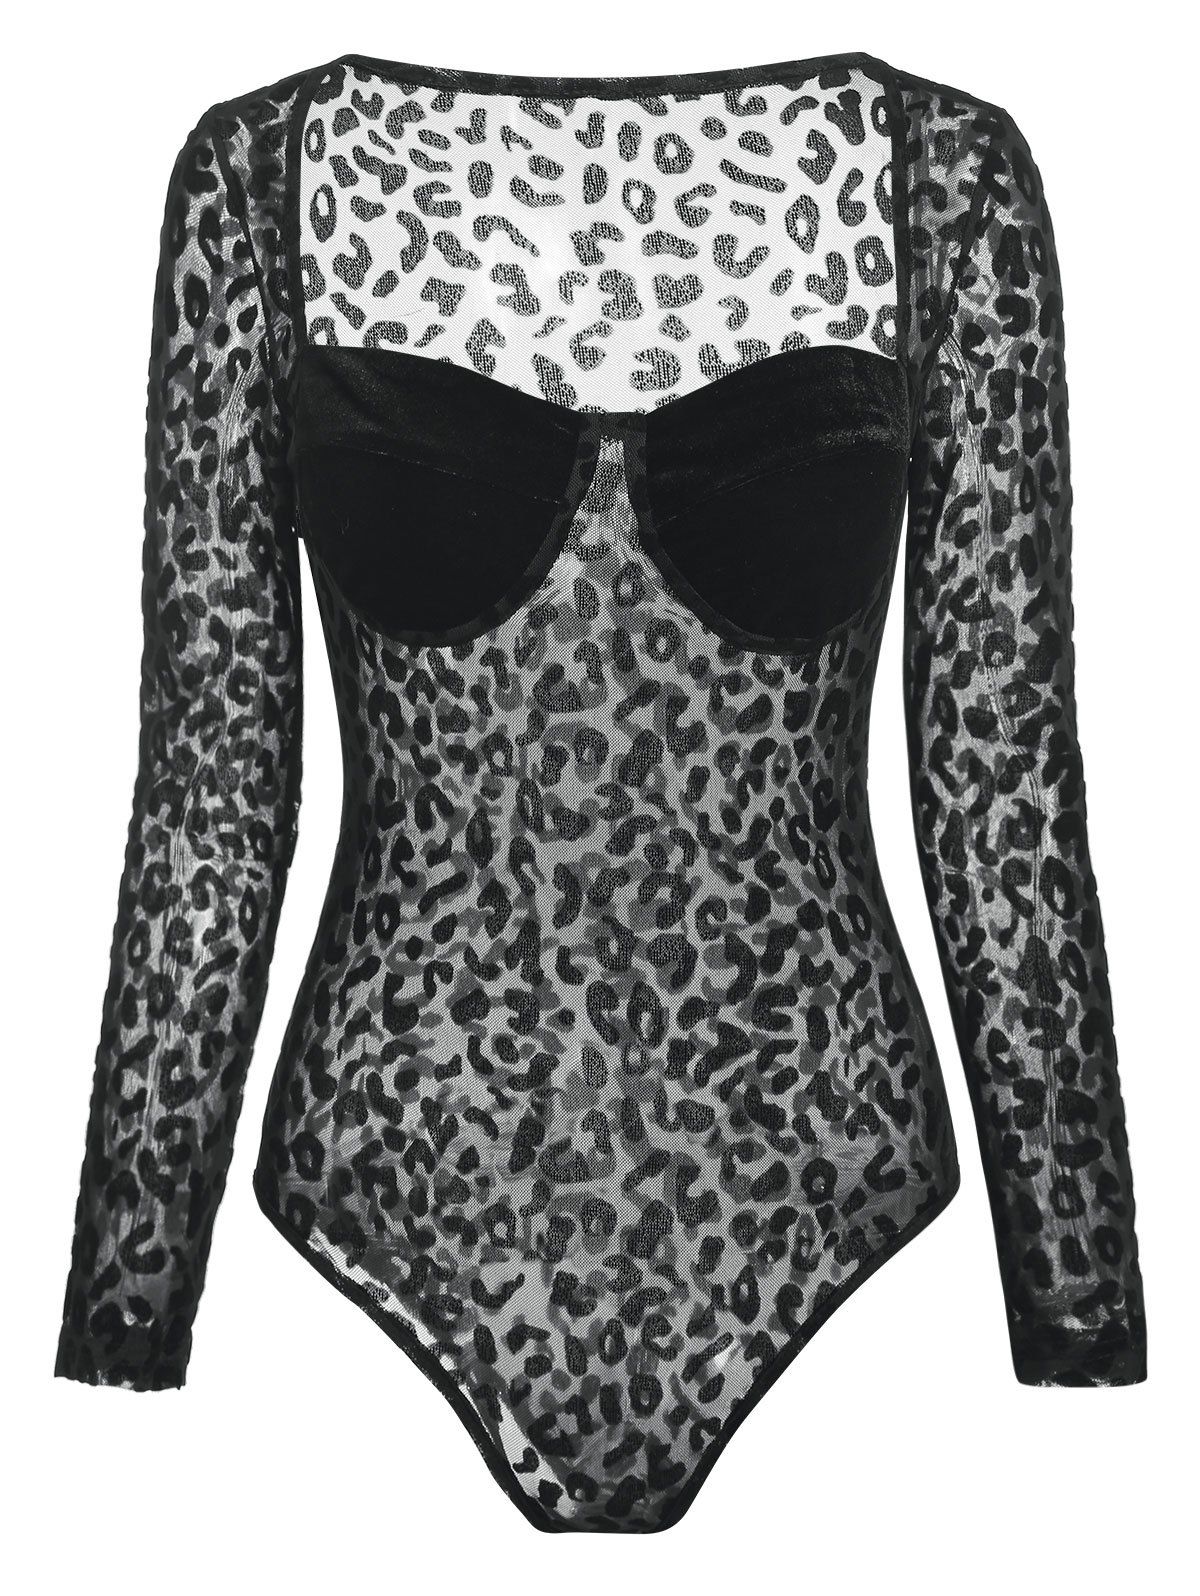 Leopard Corset Style Sheer Bustier Bodysuit - BLACK M